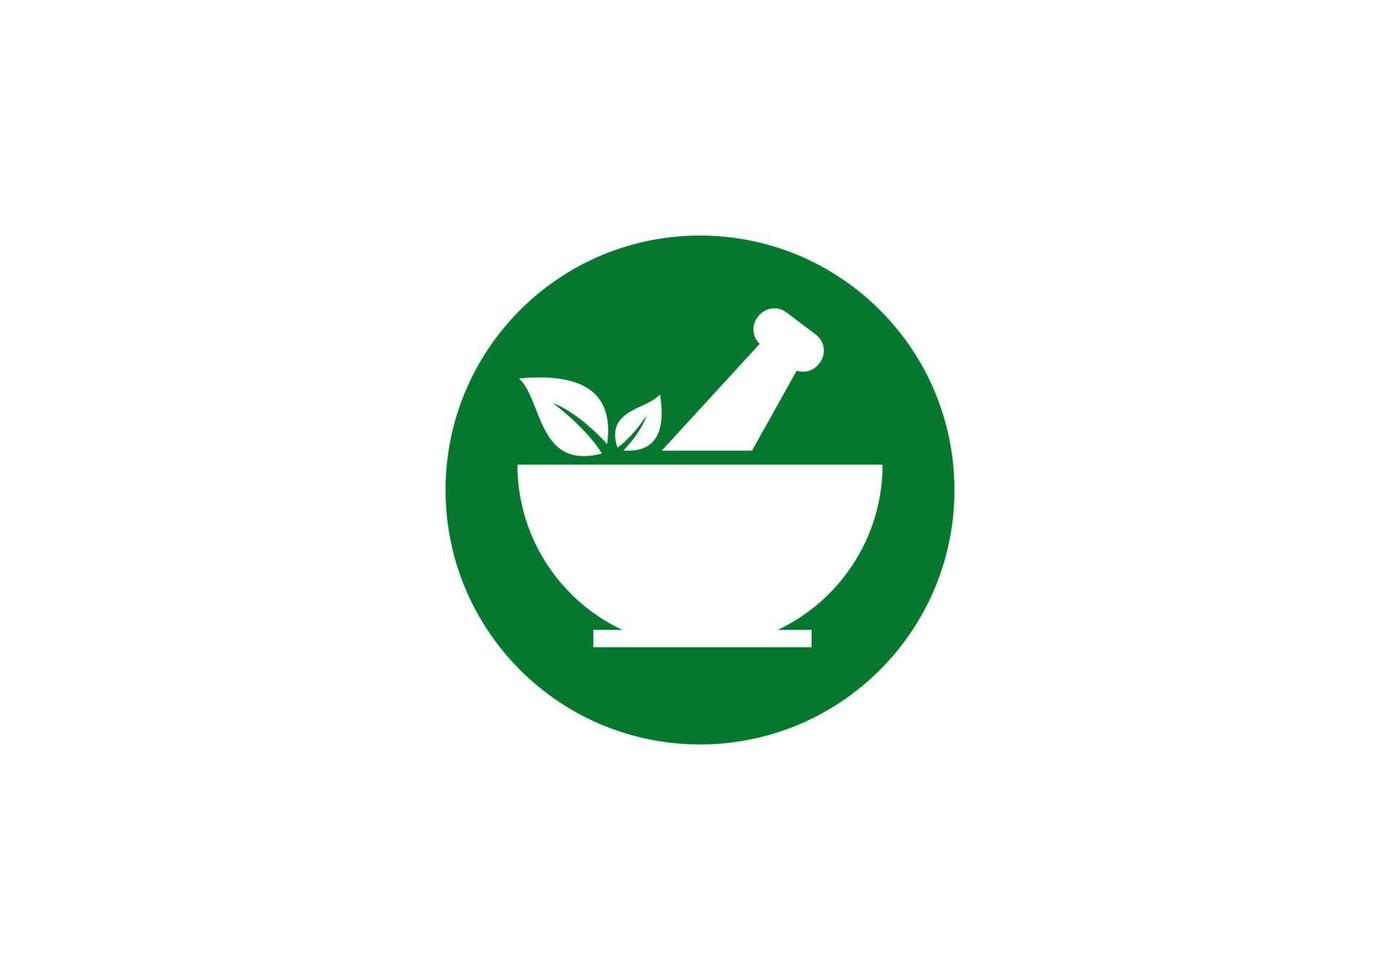 farmacia concetto logo design. ayurveda erbaceo logo. medico farmacia logo design vettore